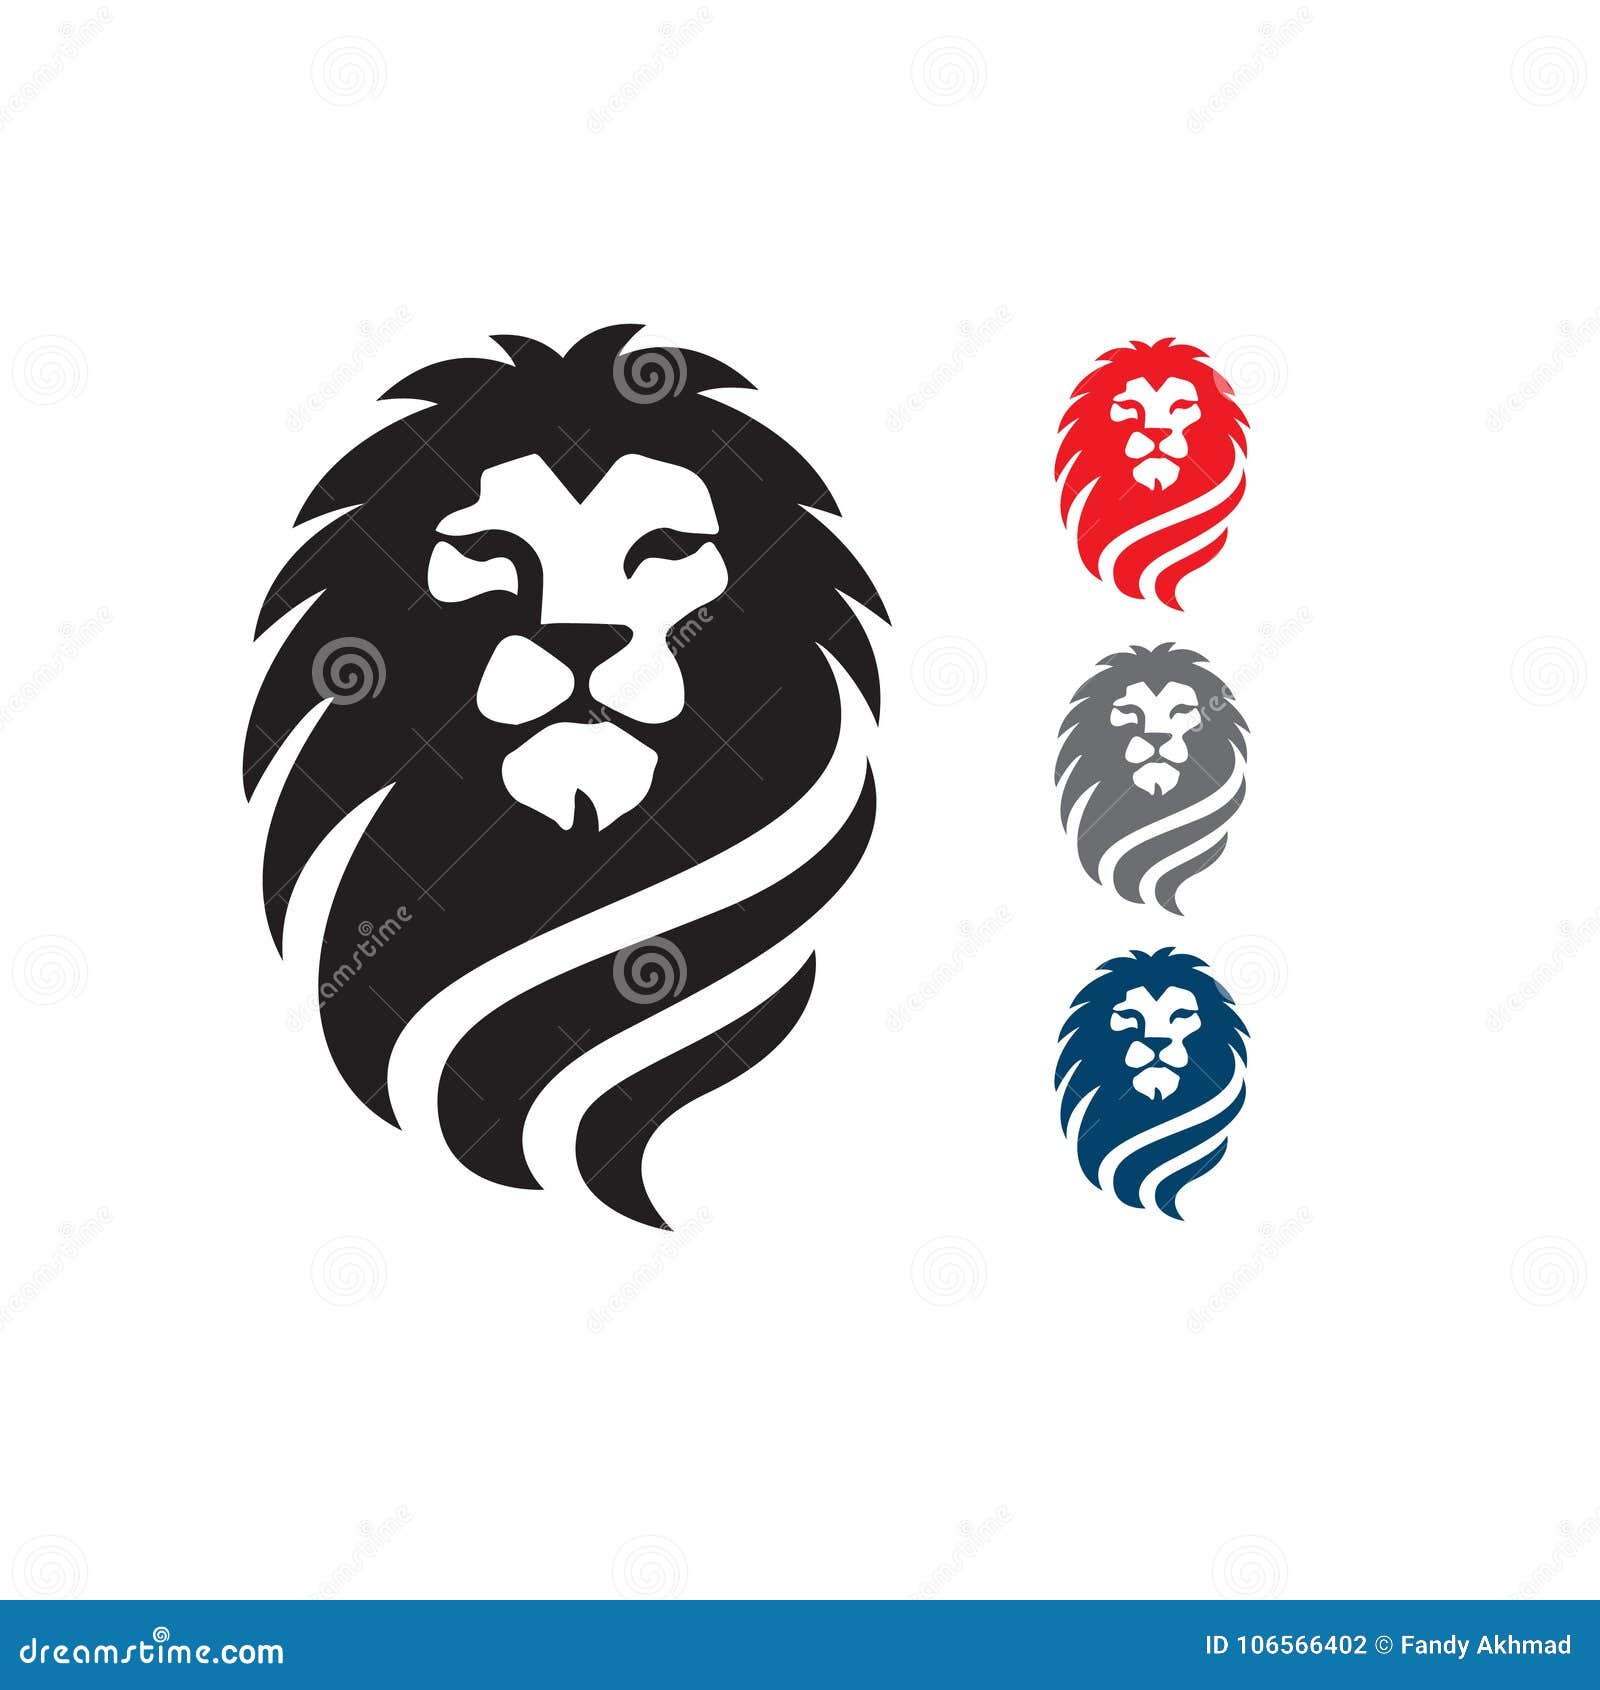 Lion Head King Jungle Logo Design Stock Vector (Royalty Free